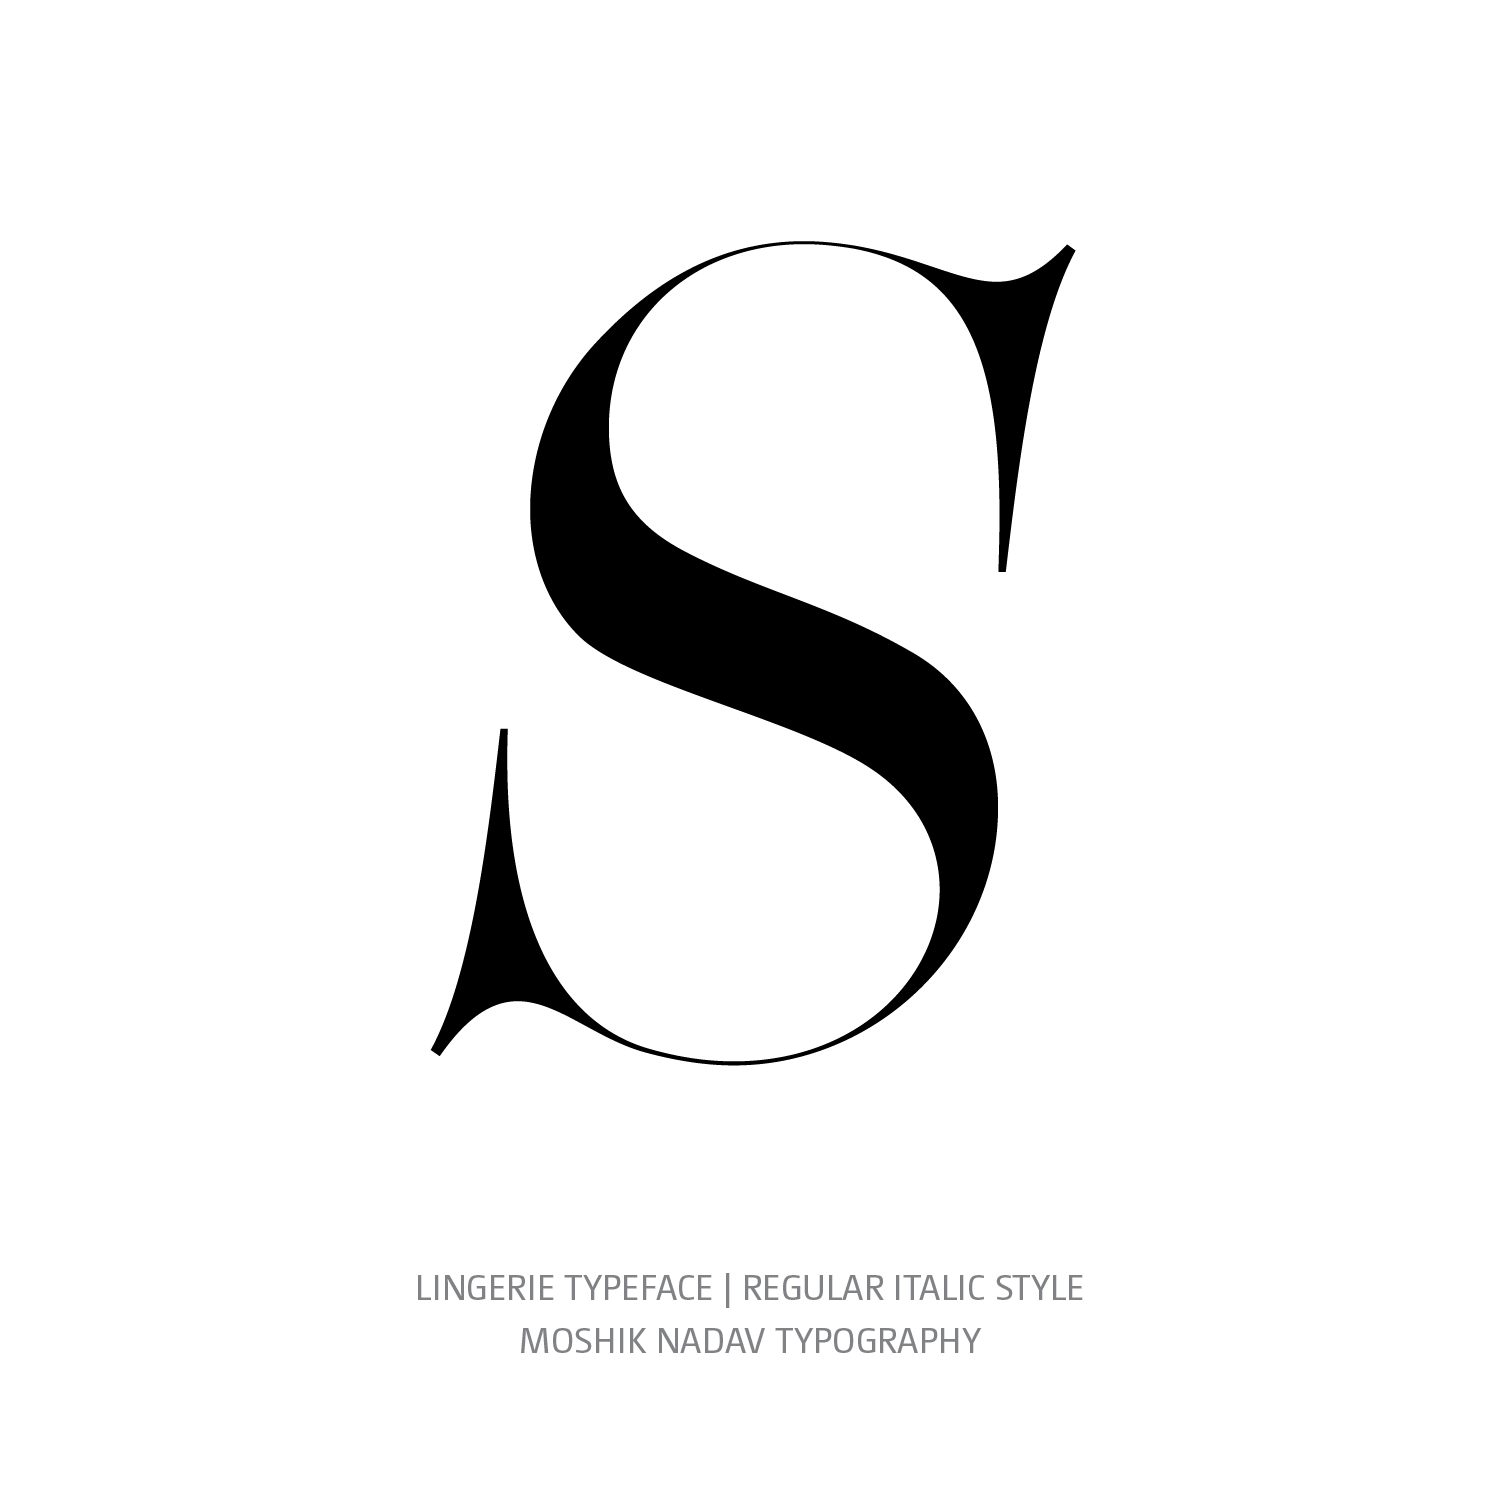 Lingerie Typeface Regular Italic S- Fashion fonts by Moshik Nadav Typography